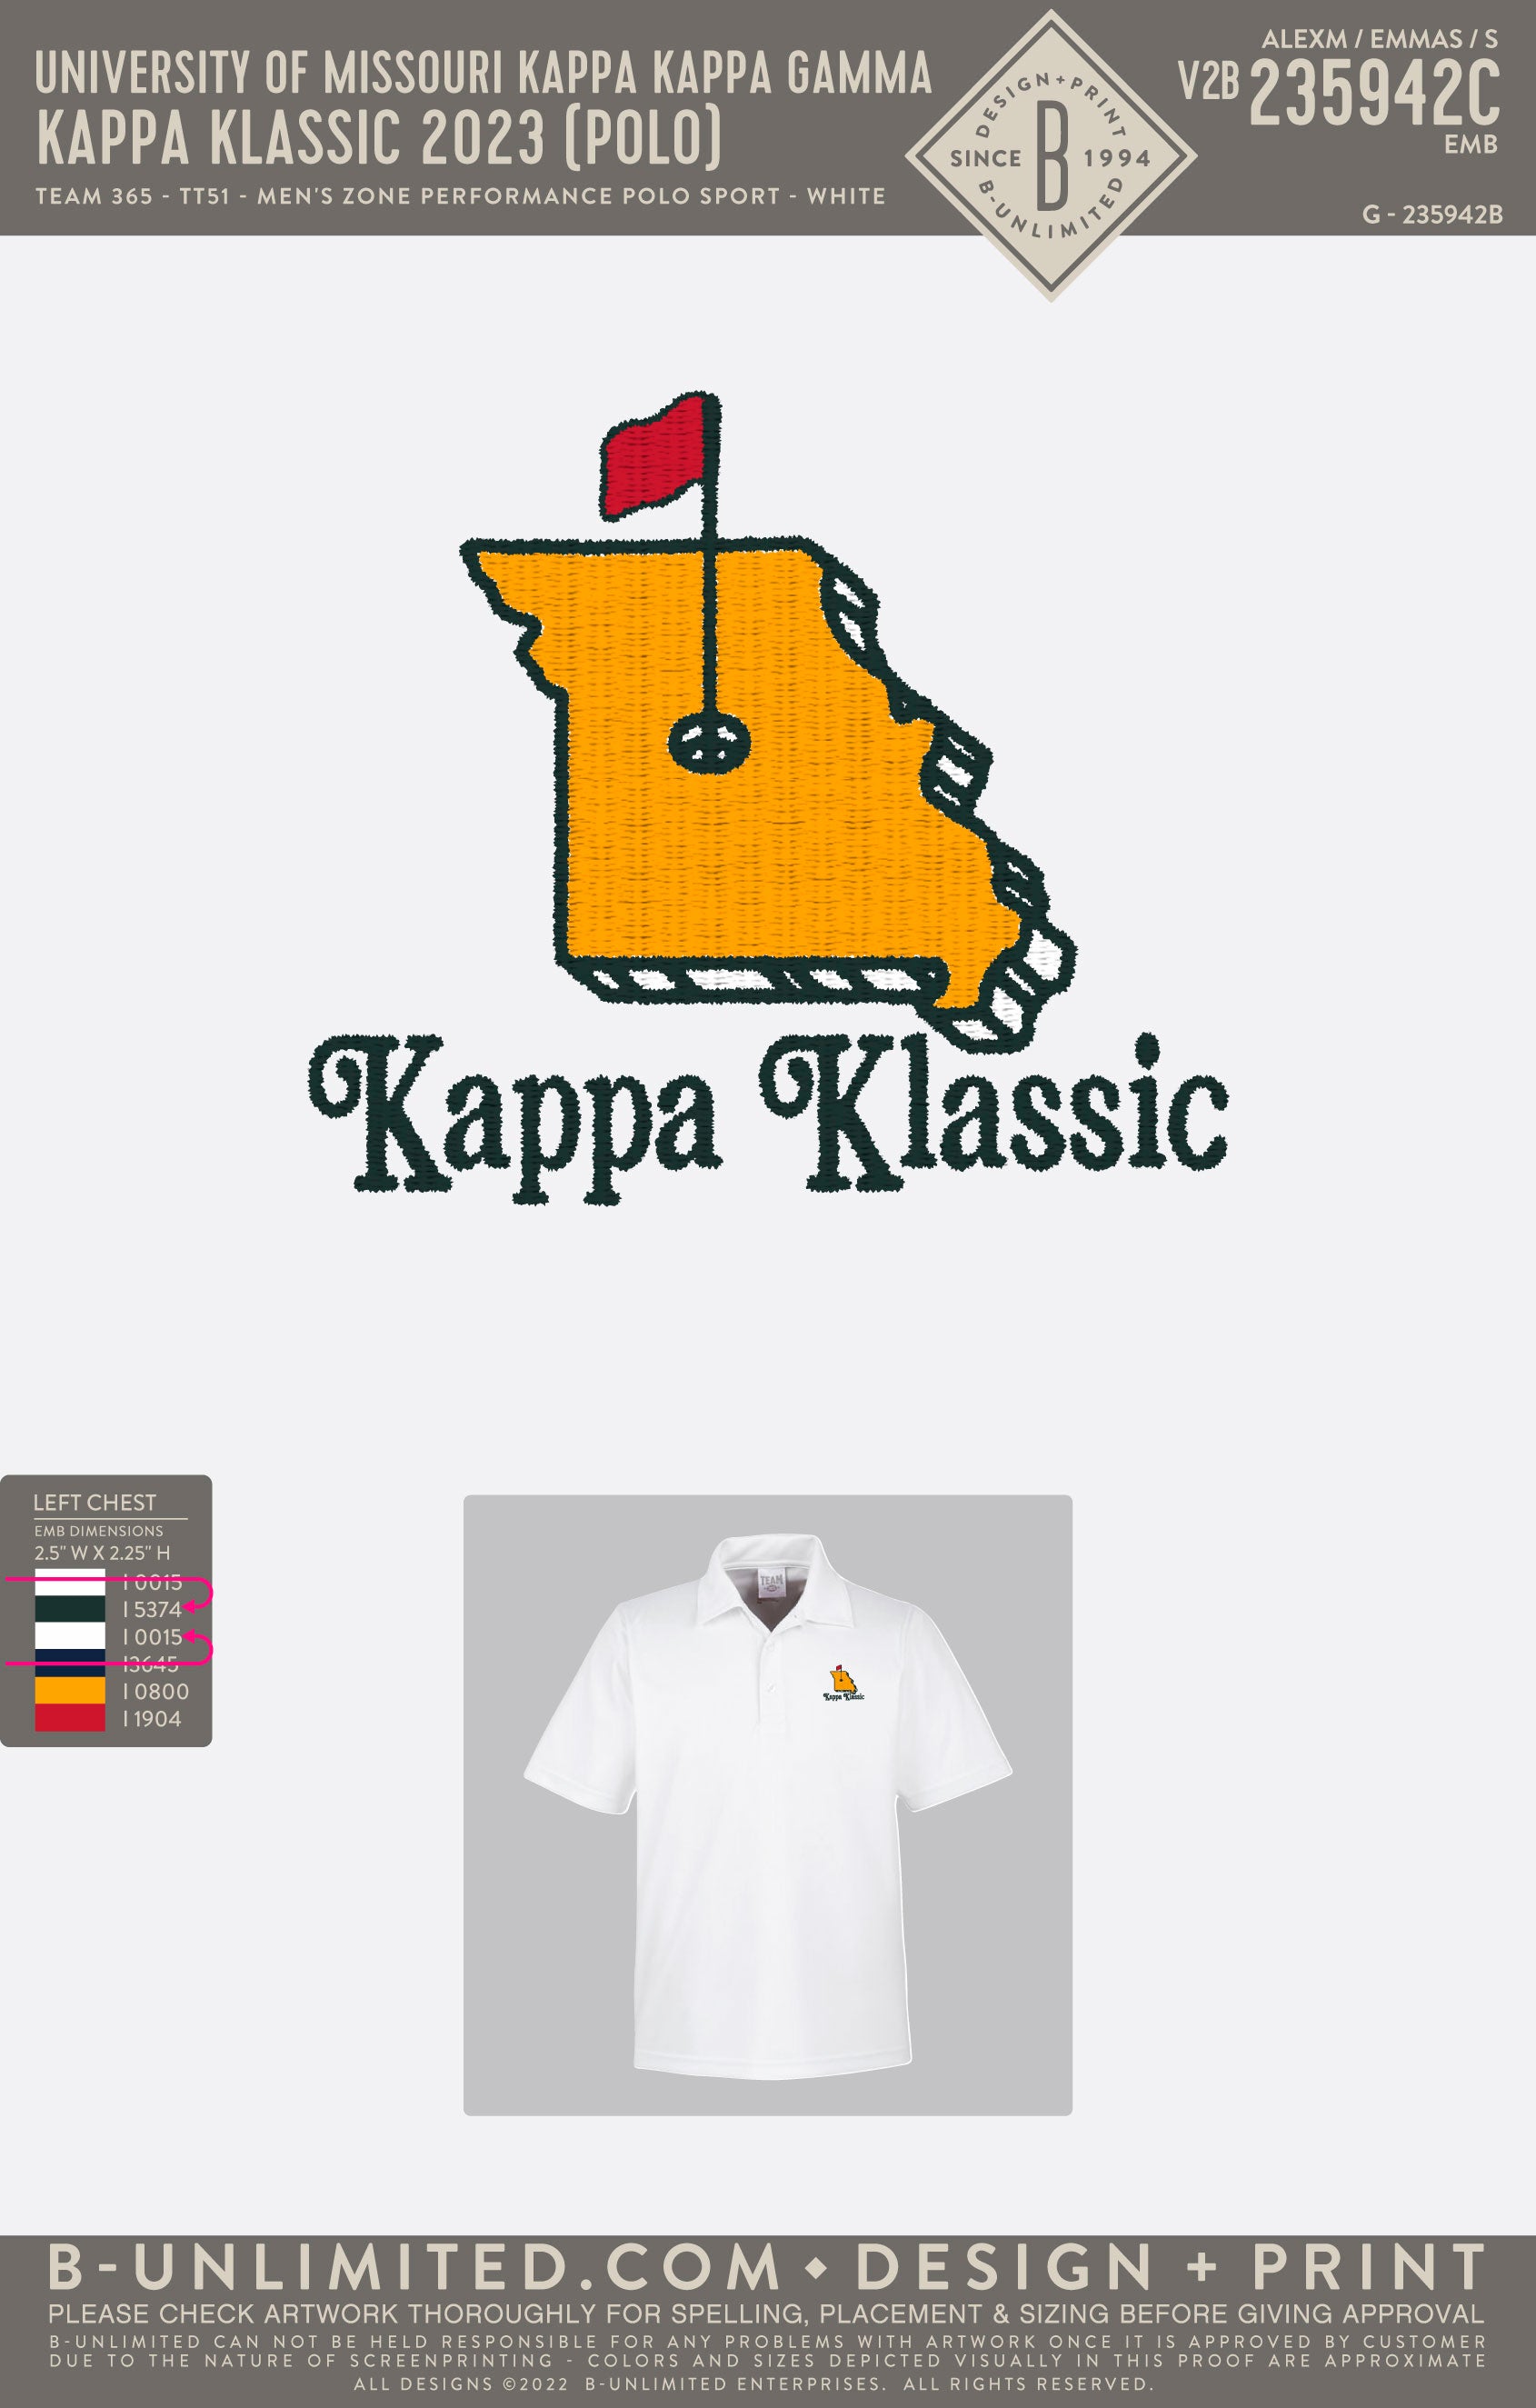 University of Missouri Kappa Kappa Gamma - Kappa Klassic 2023 (Polo) - Ultra Club - 8210 - Dri Fit Polo - White